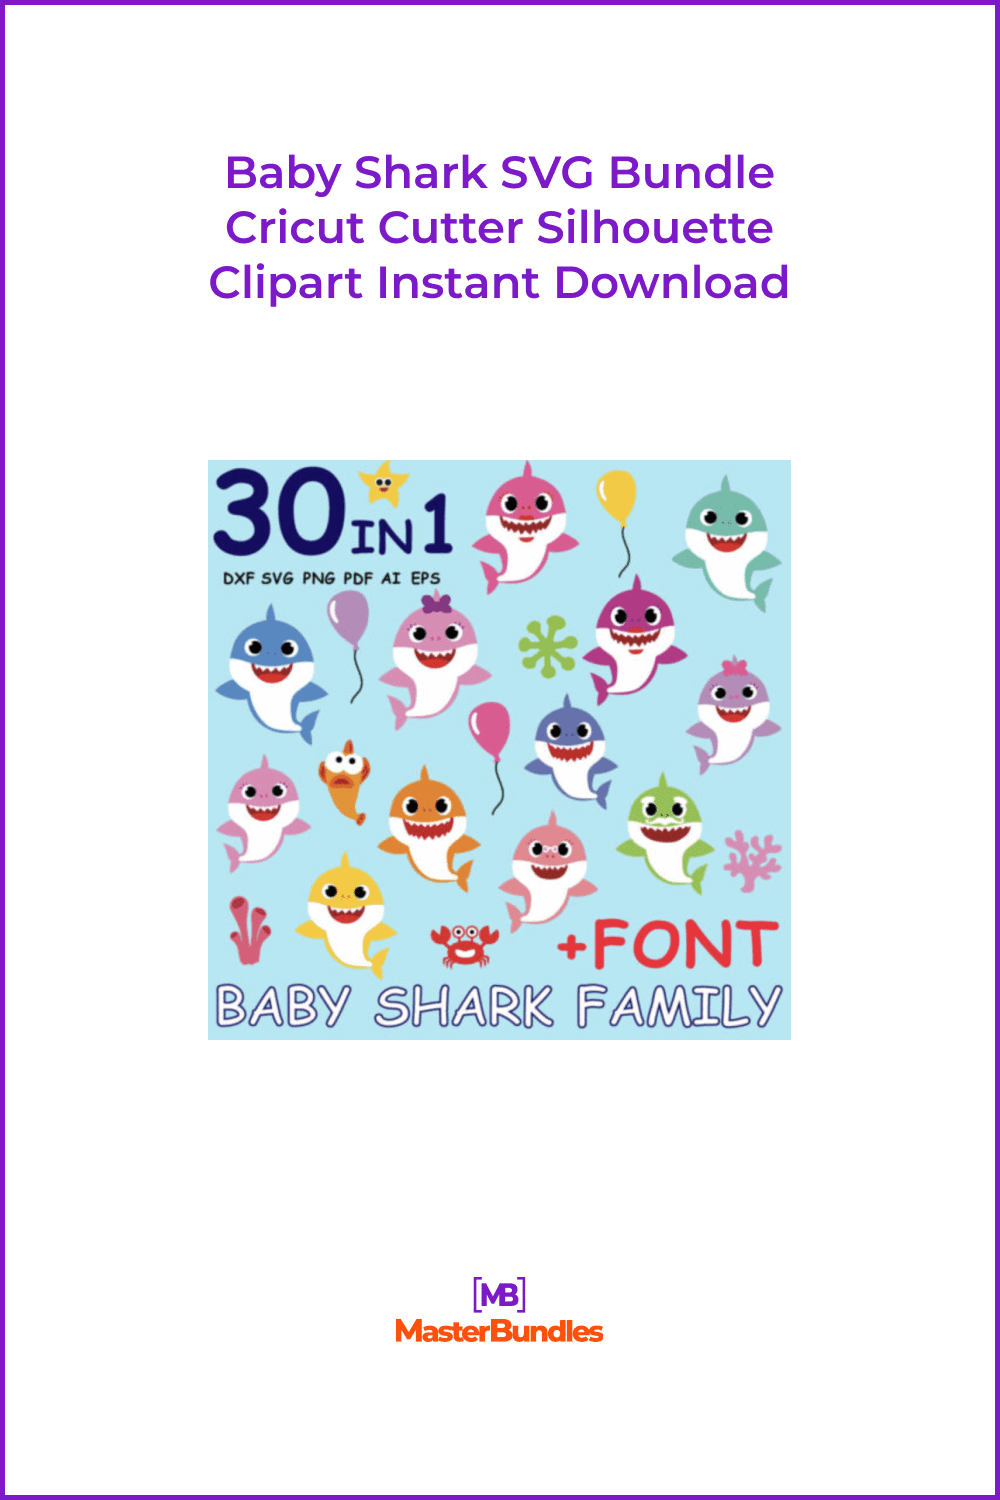 Baby Shark SVG Bundle Cricut Cutter Silhouette Clipart Instant Download.